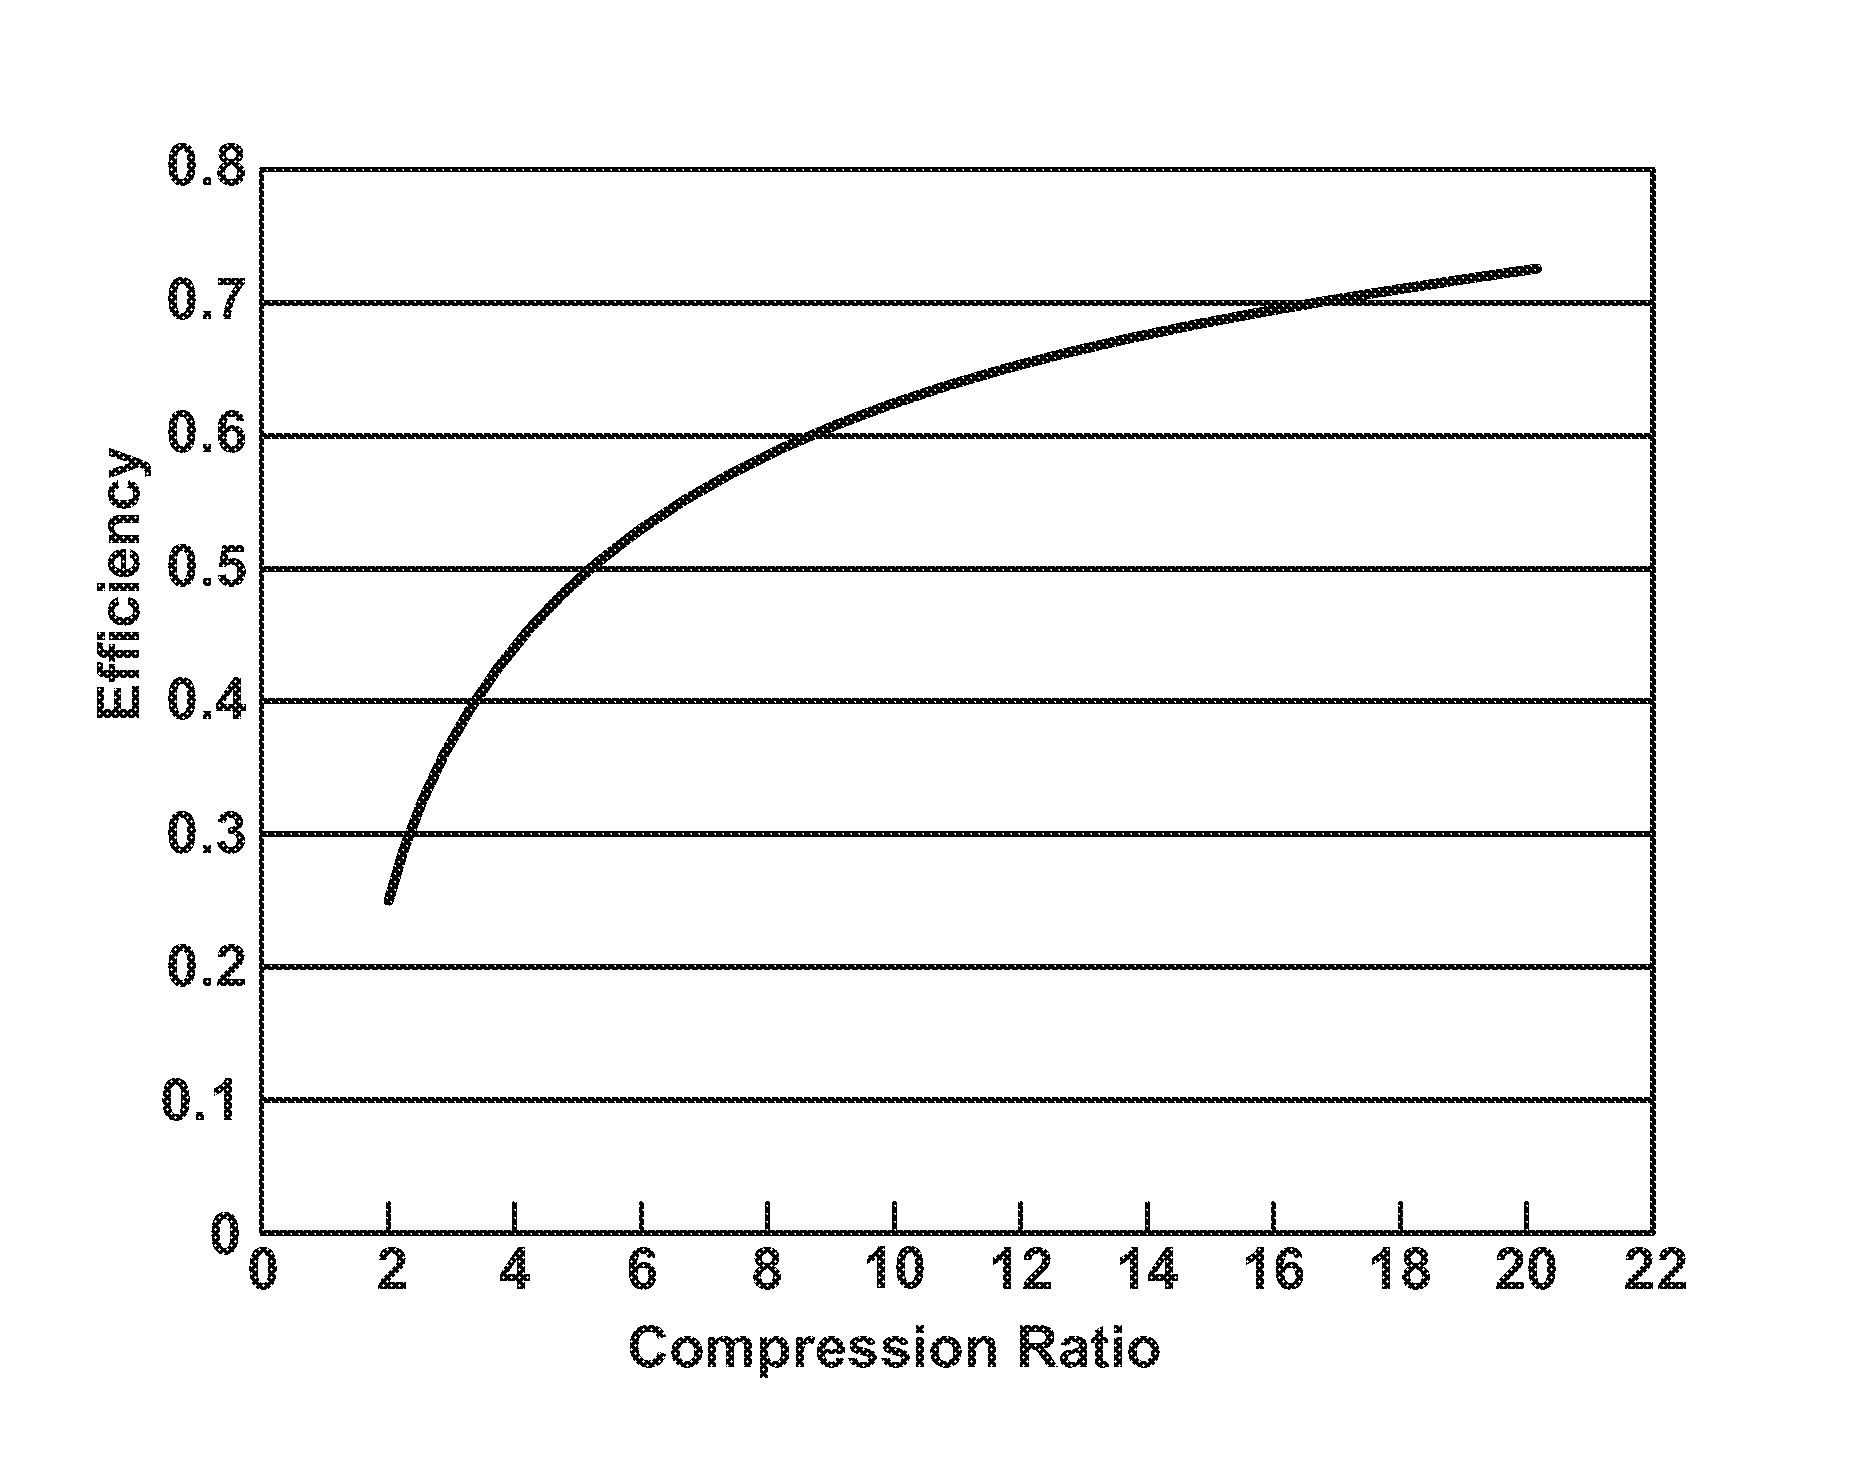 Active compression ratio modulation through intake valve phasing and knock sensor feedback